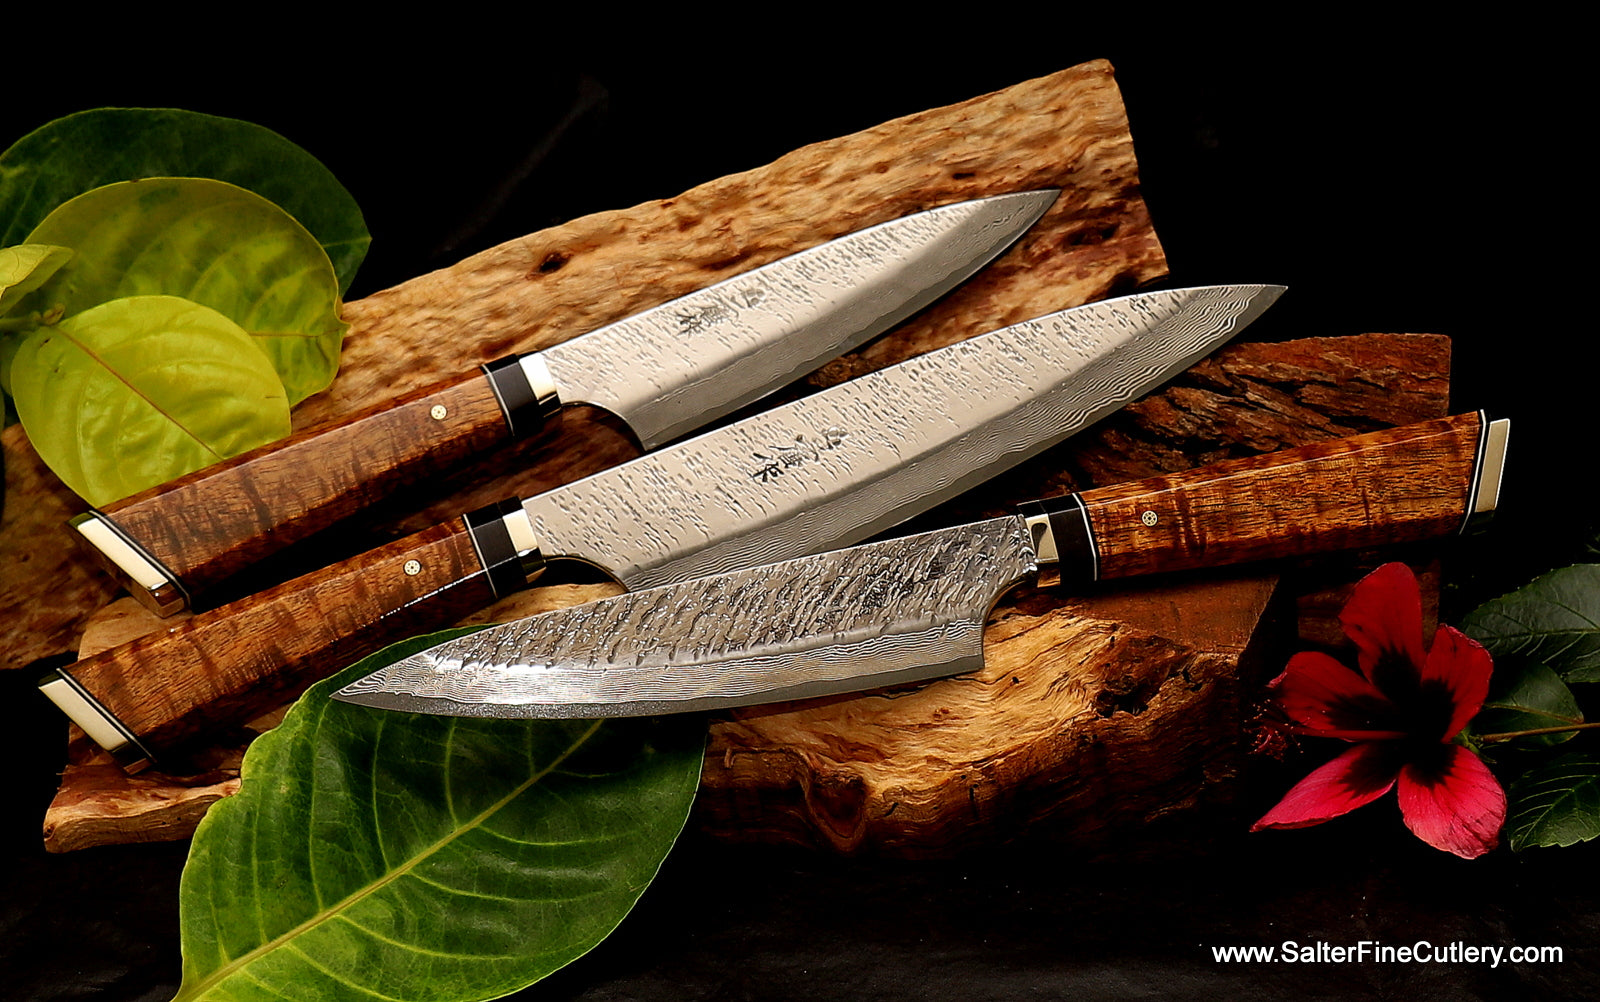 Japanese Kitchen & Chef Knives